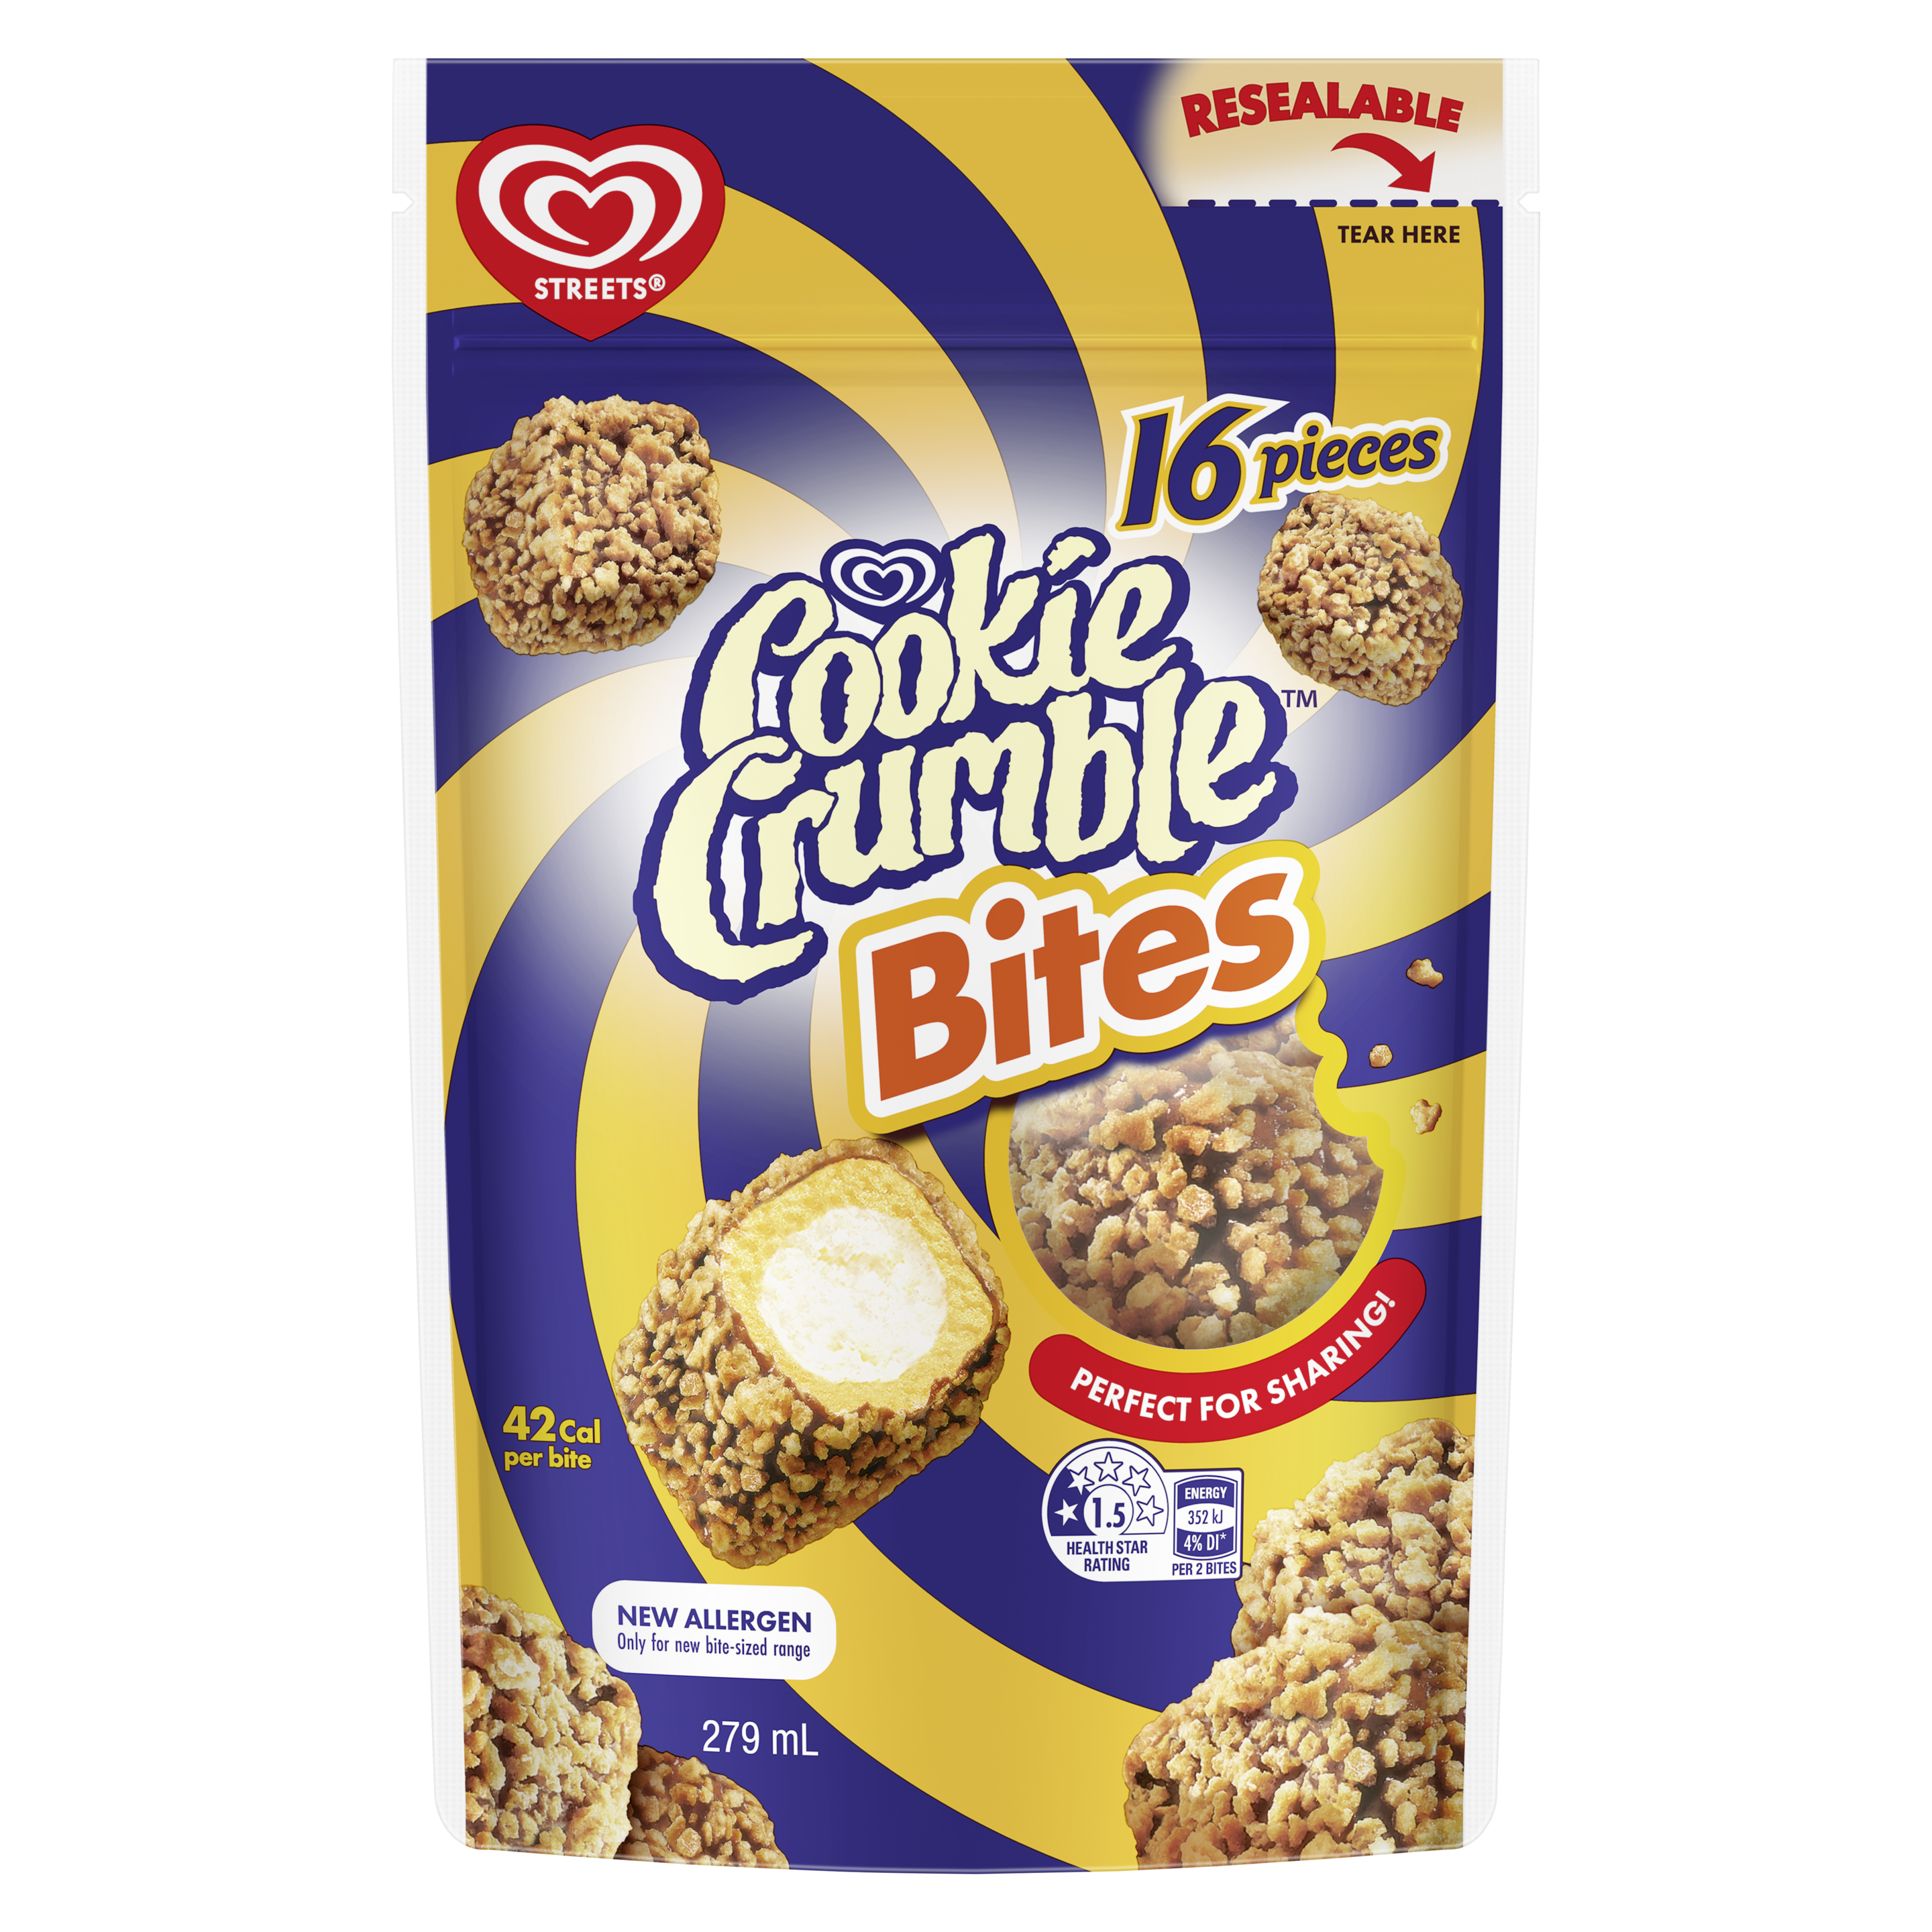 Cookie Crumble Bites